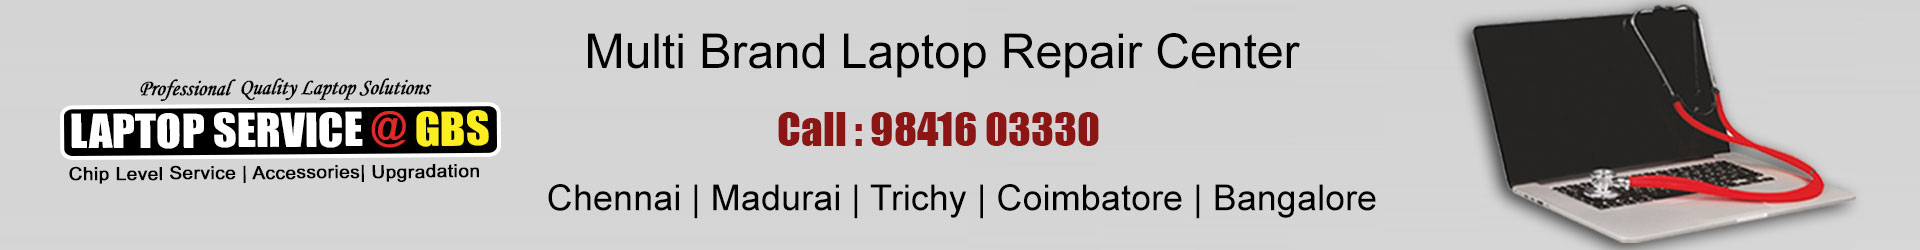 laptop service center in t nagar